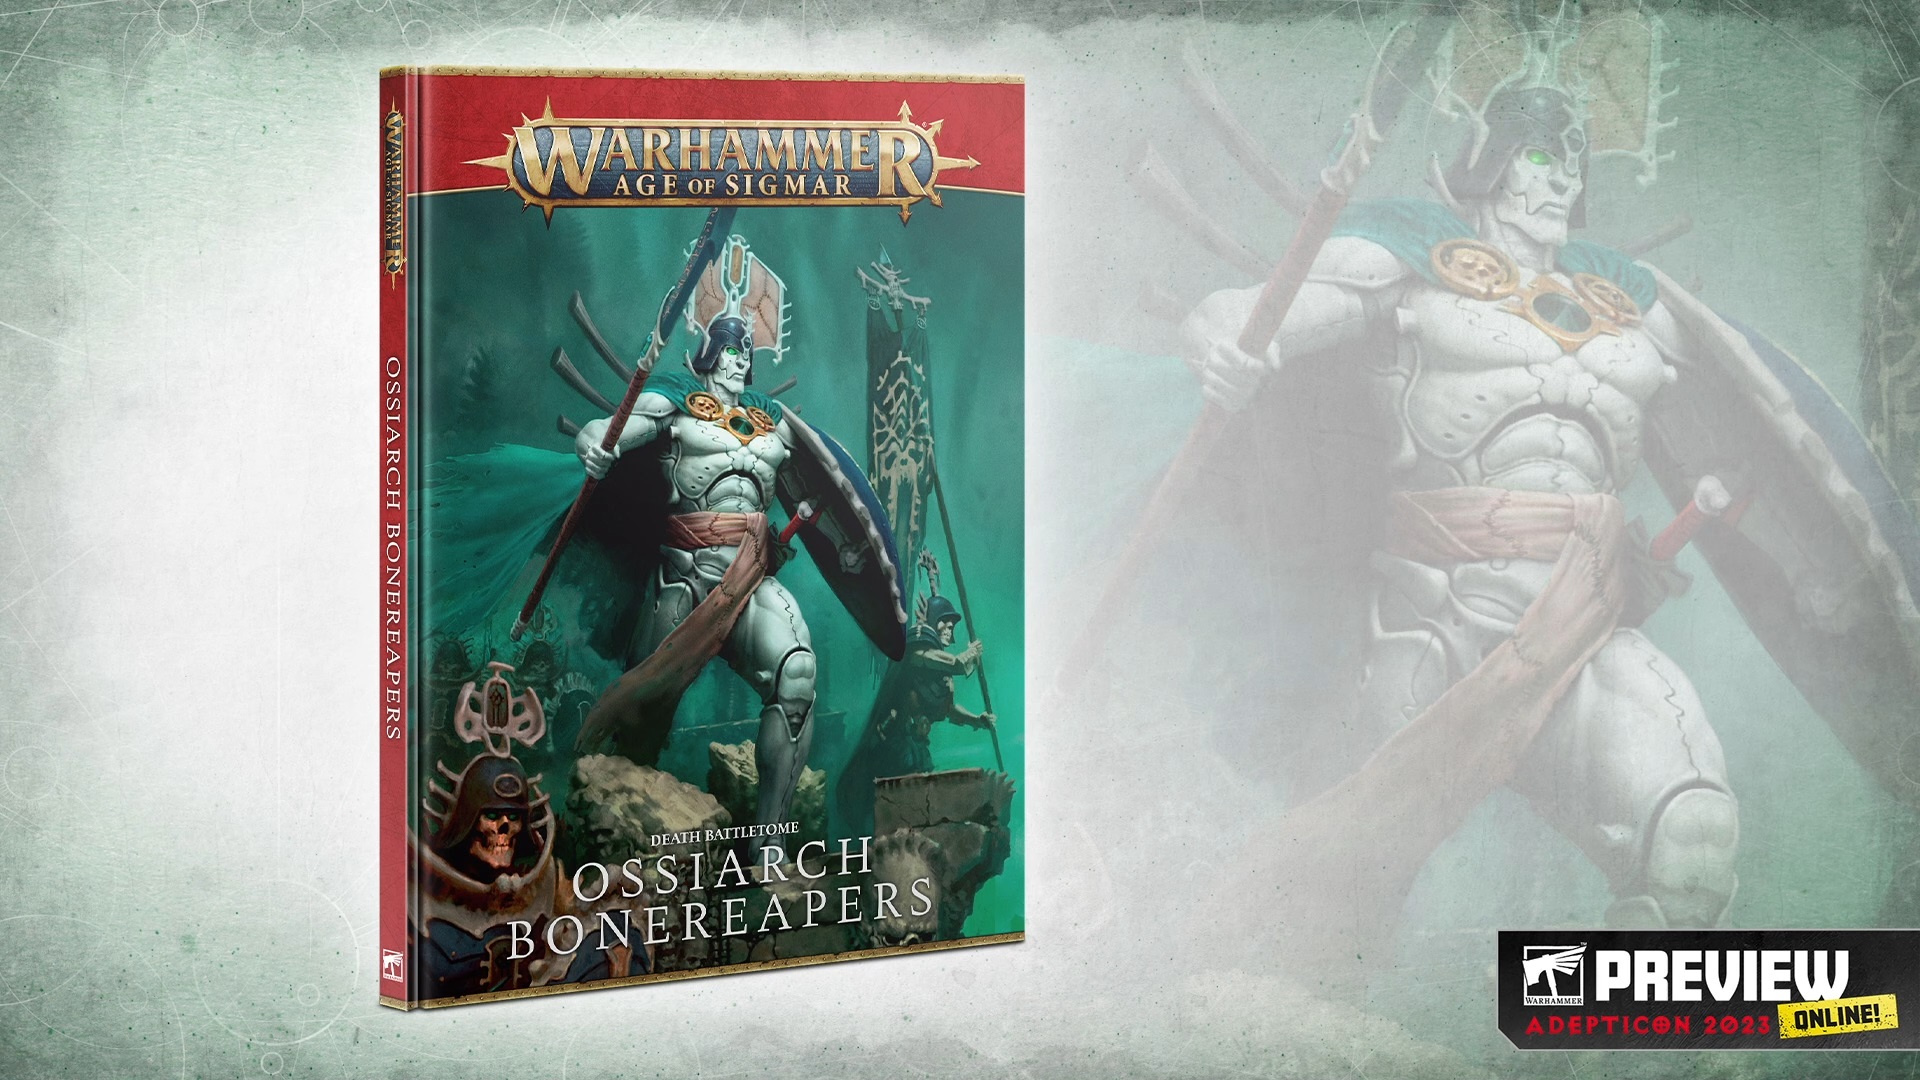 Death Battletome Ossiarch Bonereapers - Warhammer Age Of Sigmar